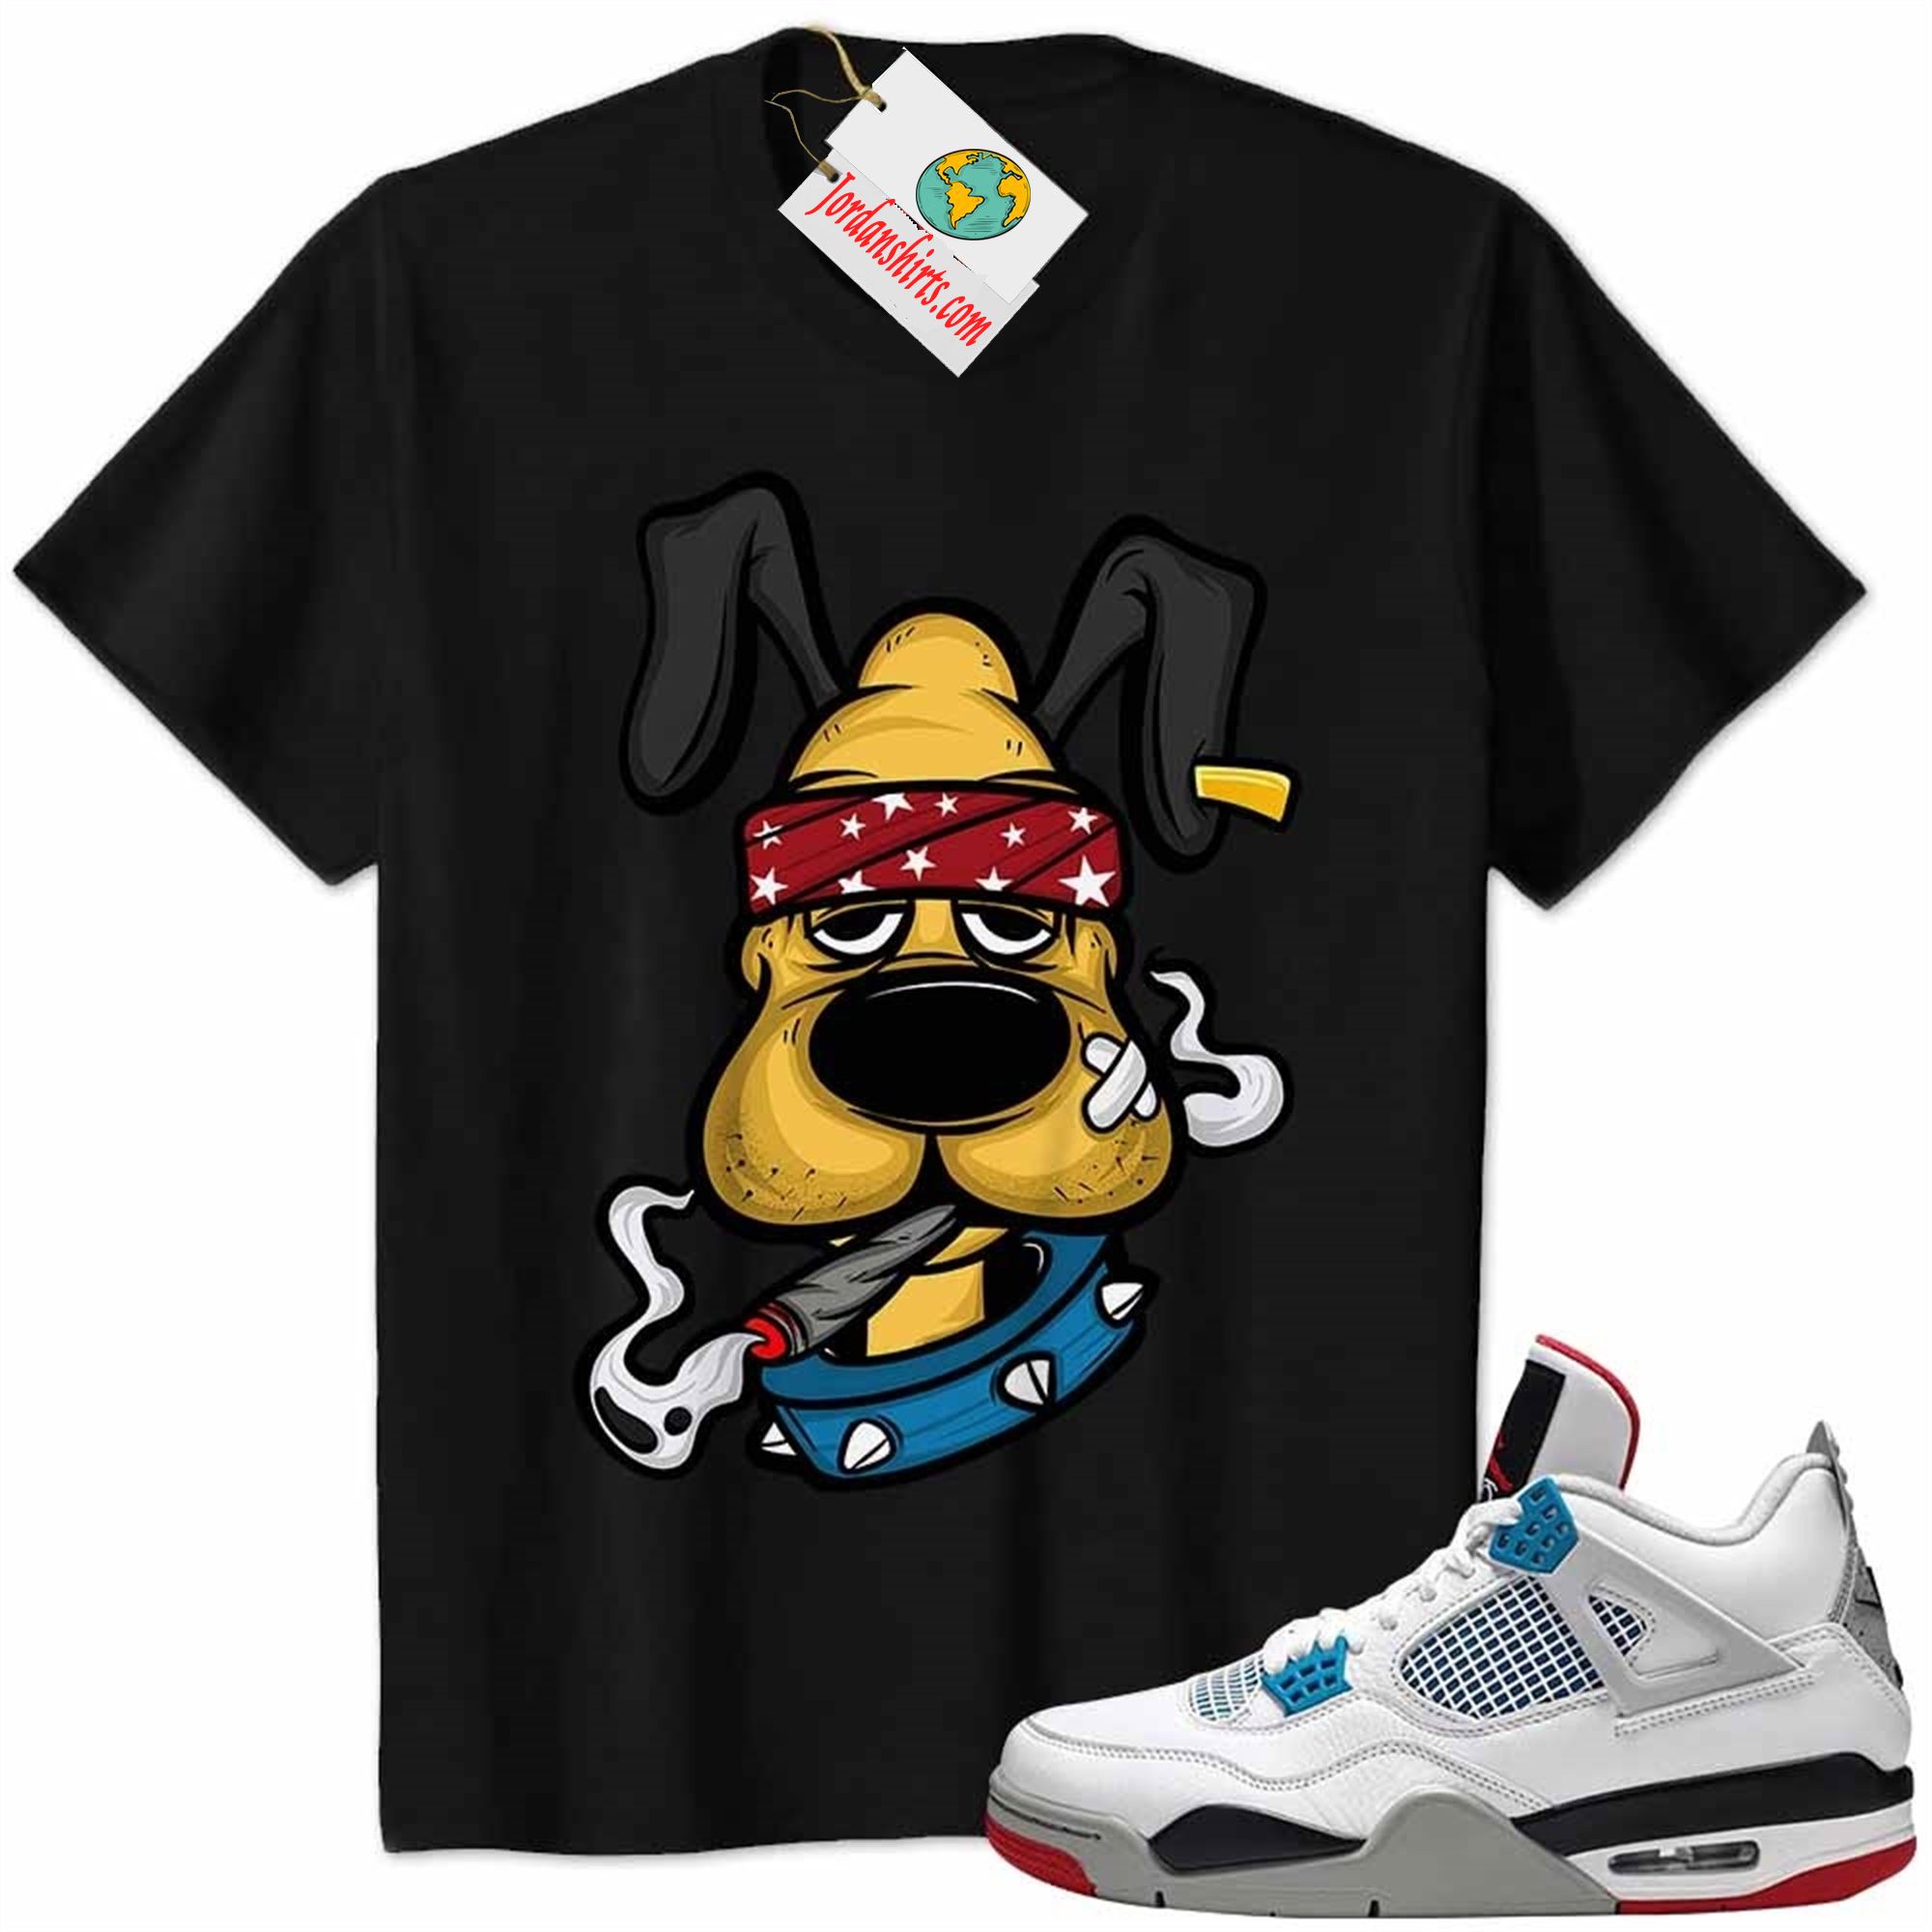 Jordan 4 Shirt, Gangster Pluto Smoke Weed Black Air Jordan 4 What The 4s Size Up To 5xl